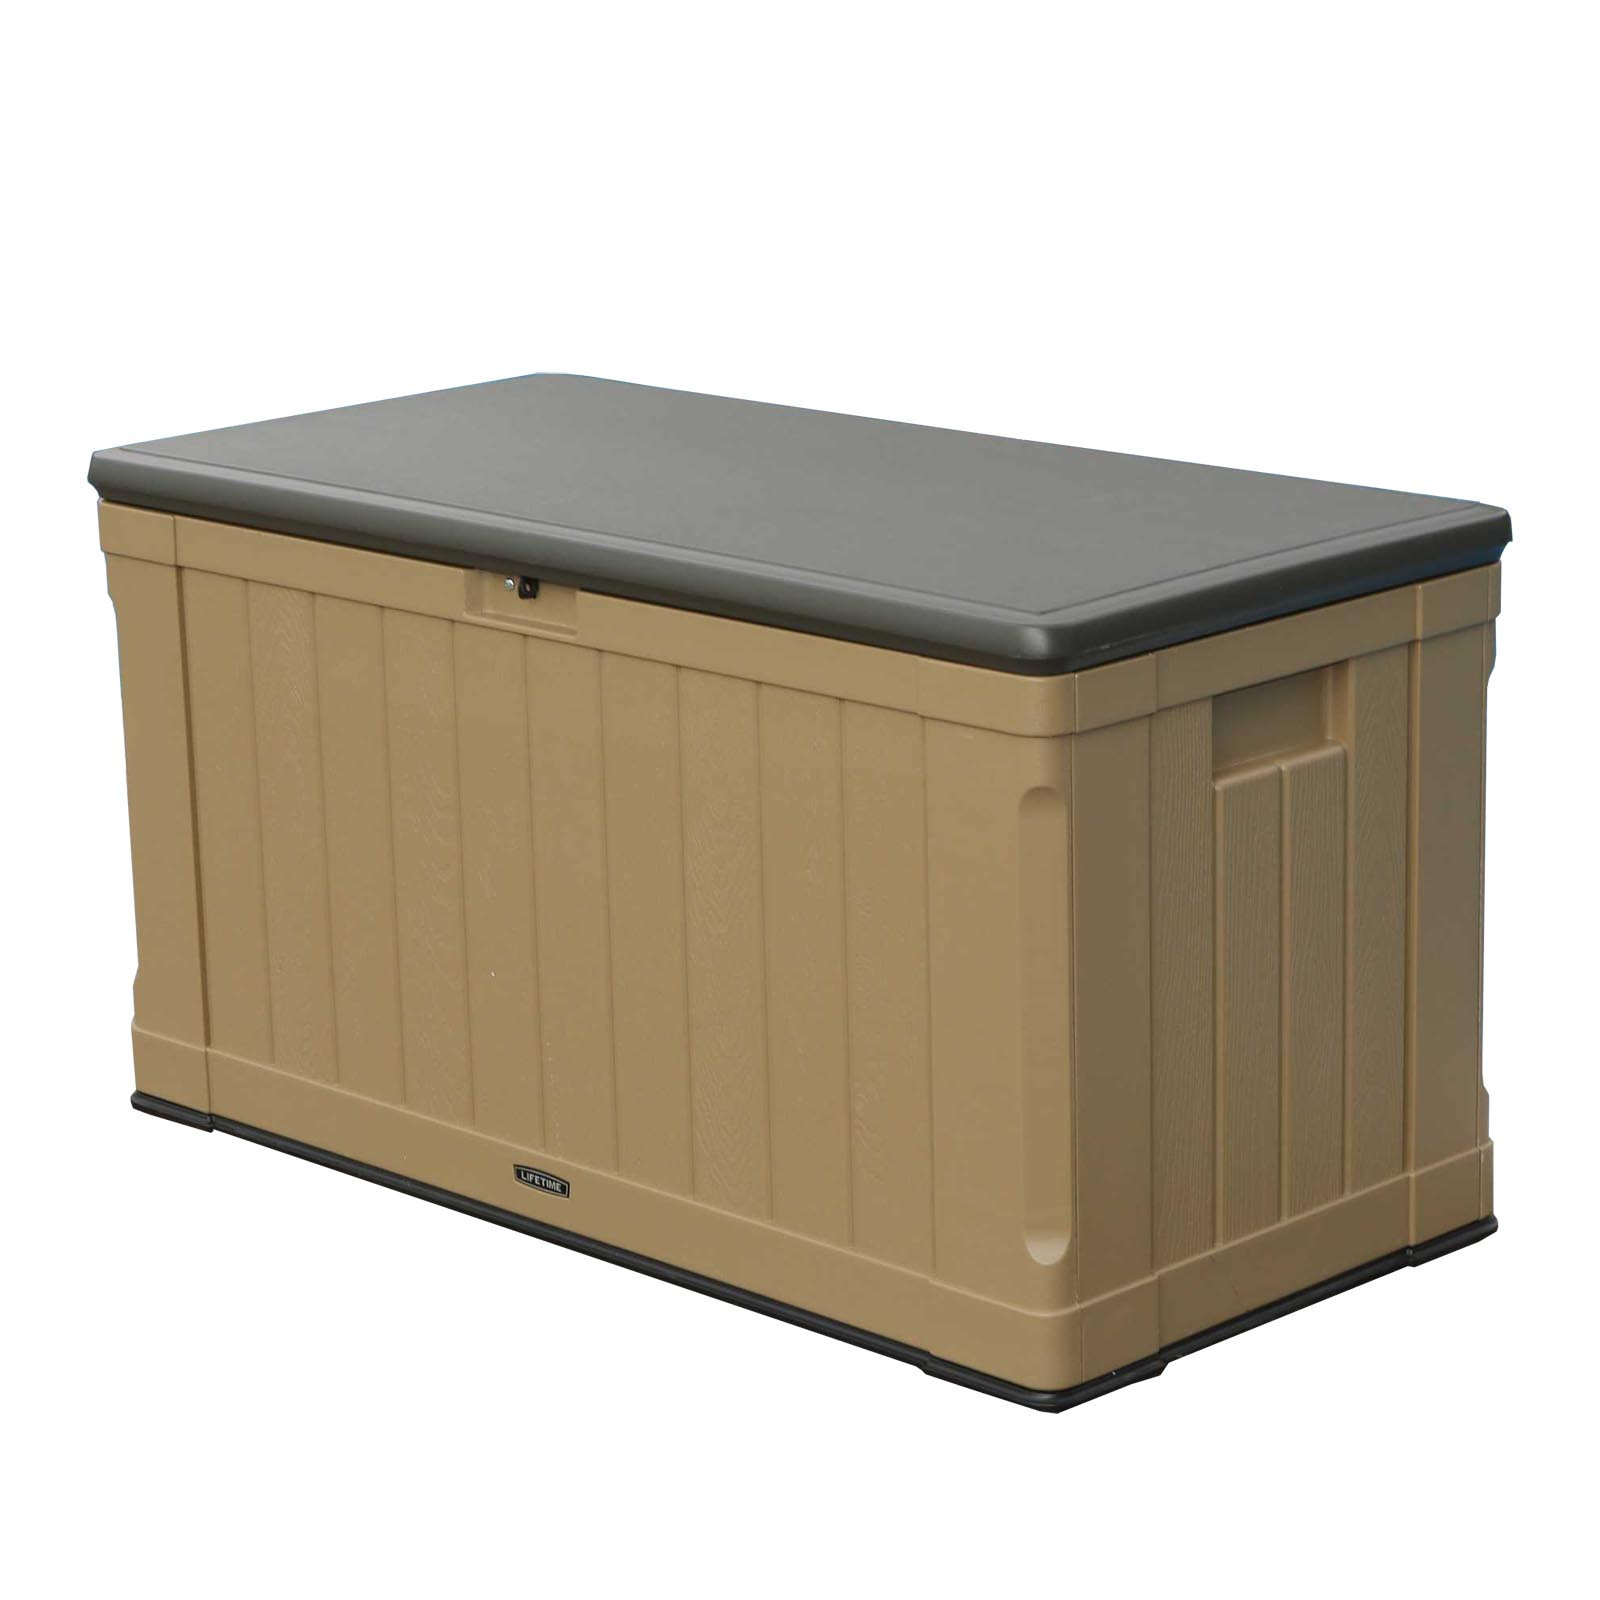 Storage Bench Deck Box
 Lifetime 116 Gallon Outdoor Organizer Storage Pool & Patio